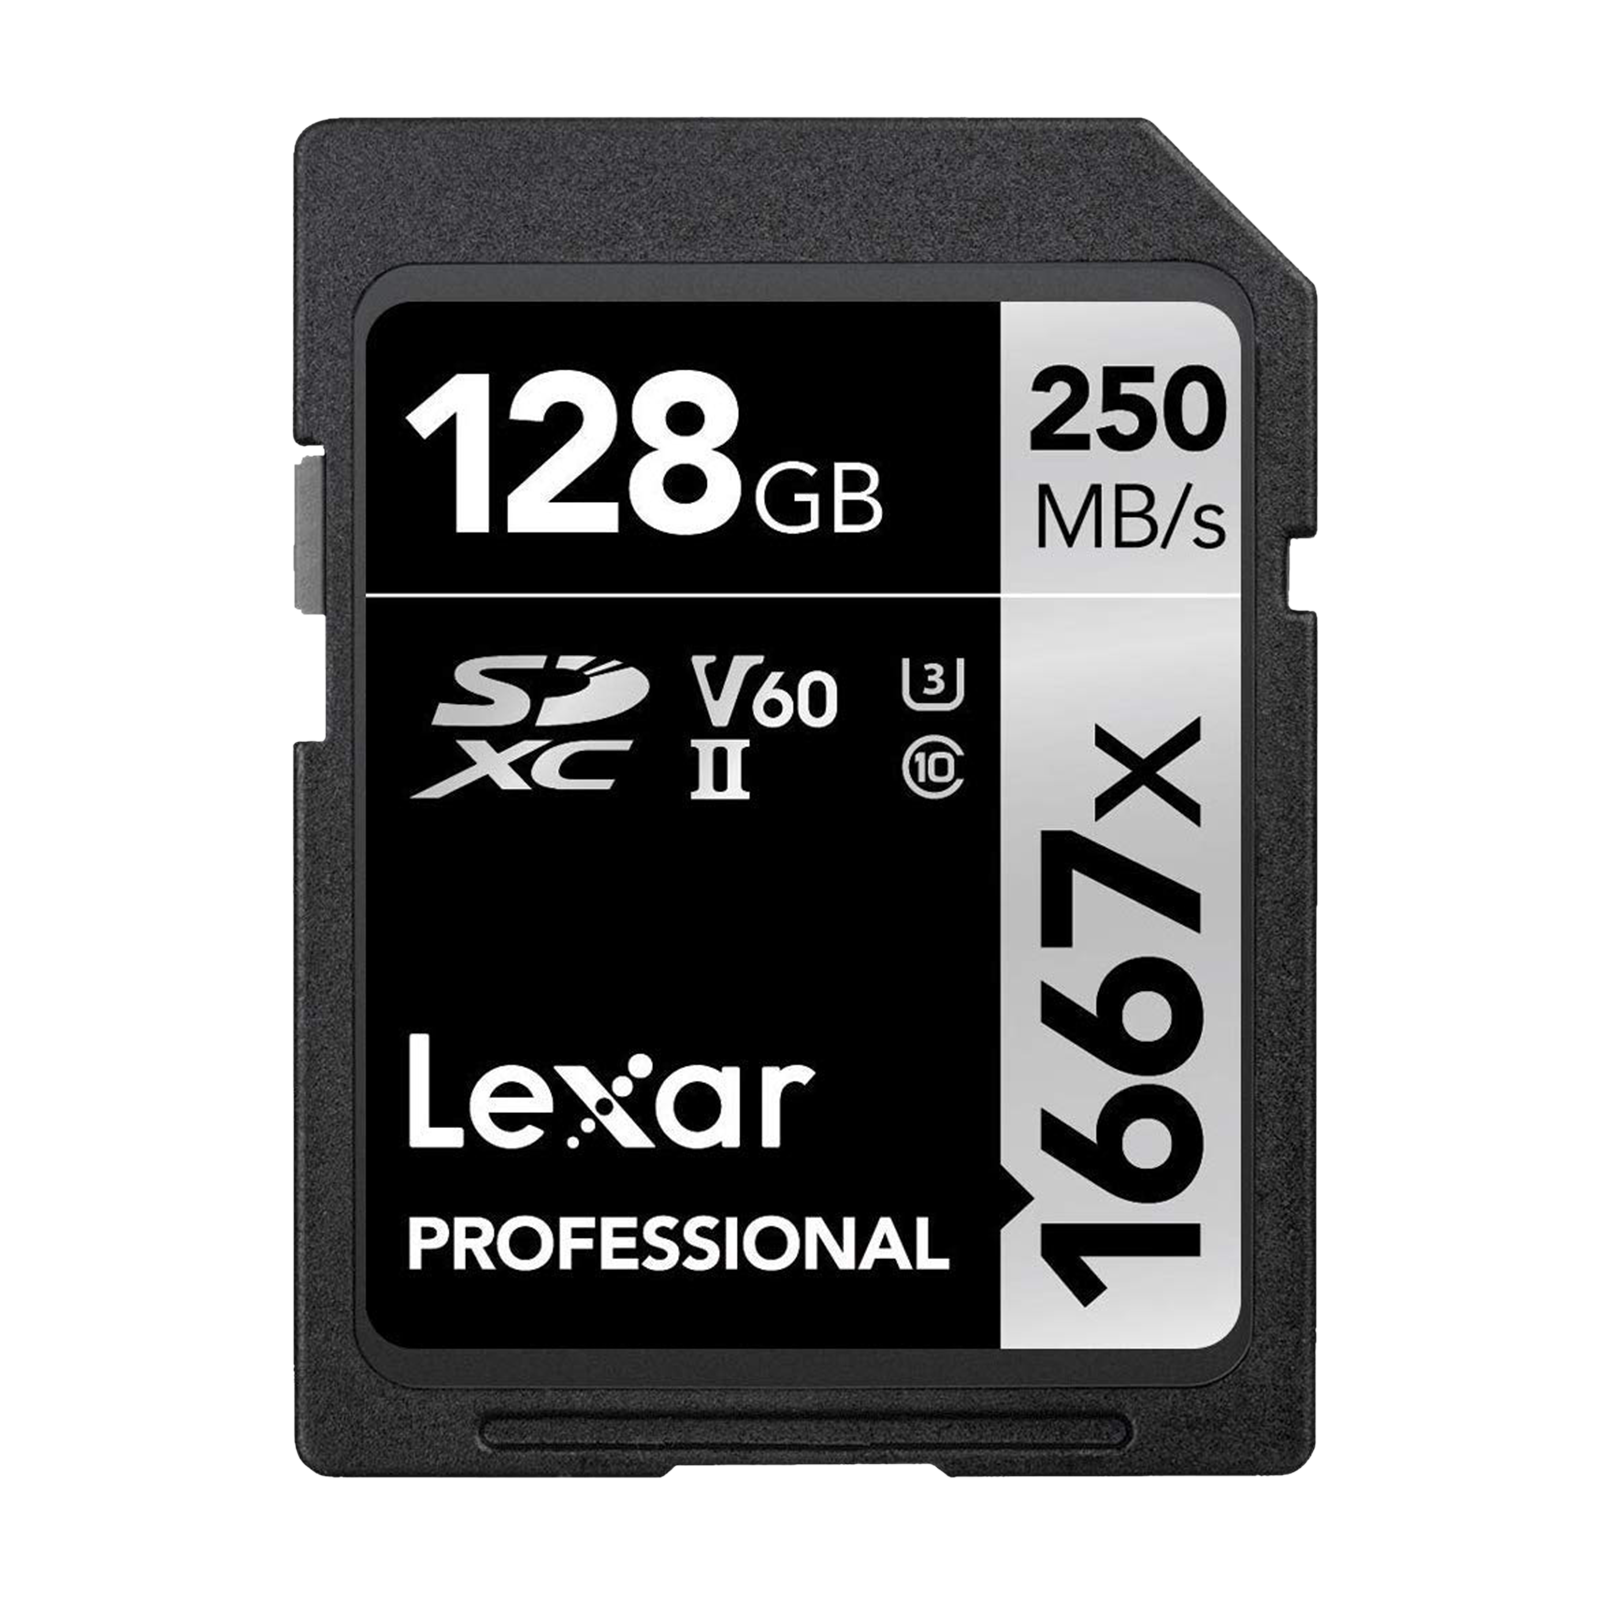 lexar memory stick 128mb